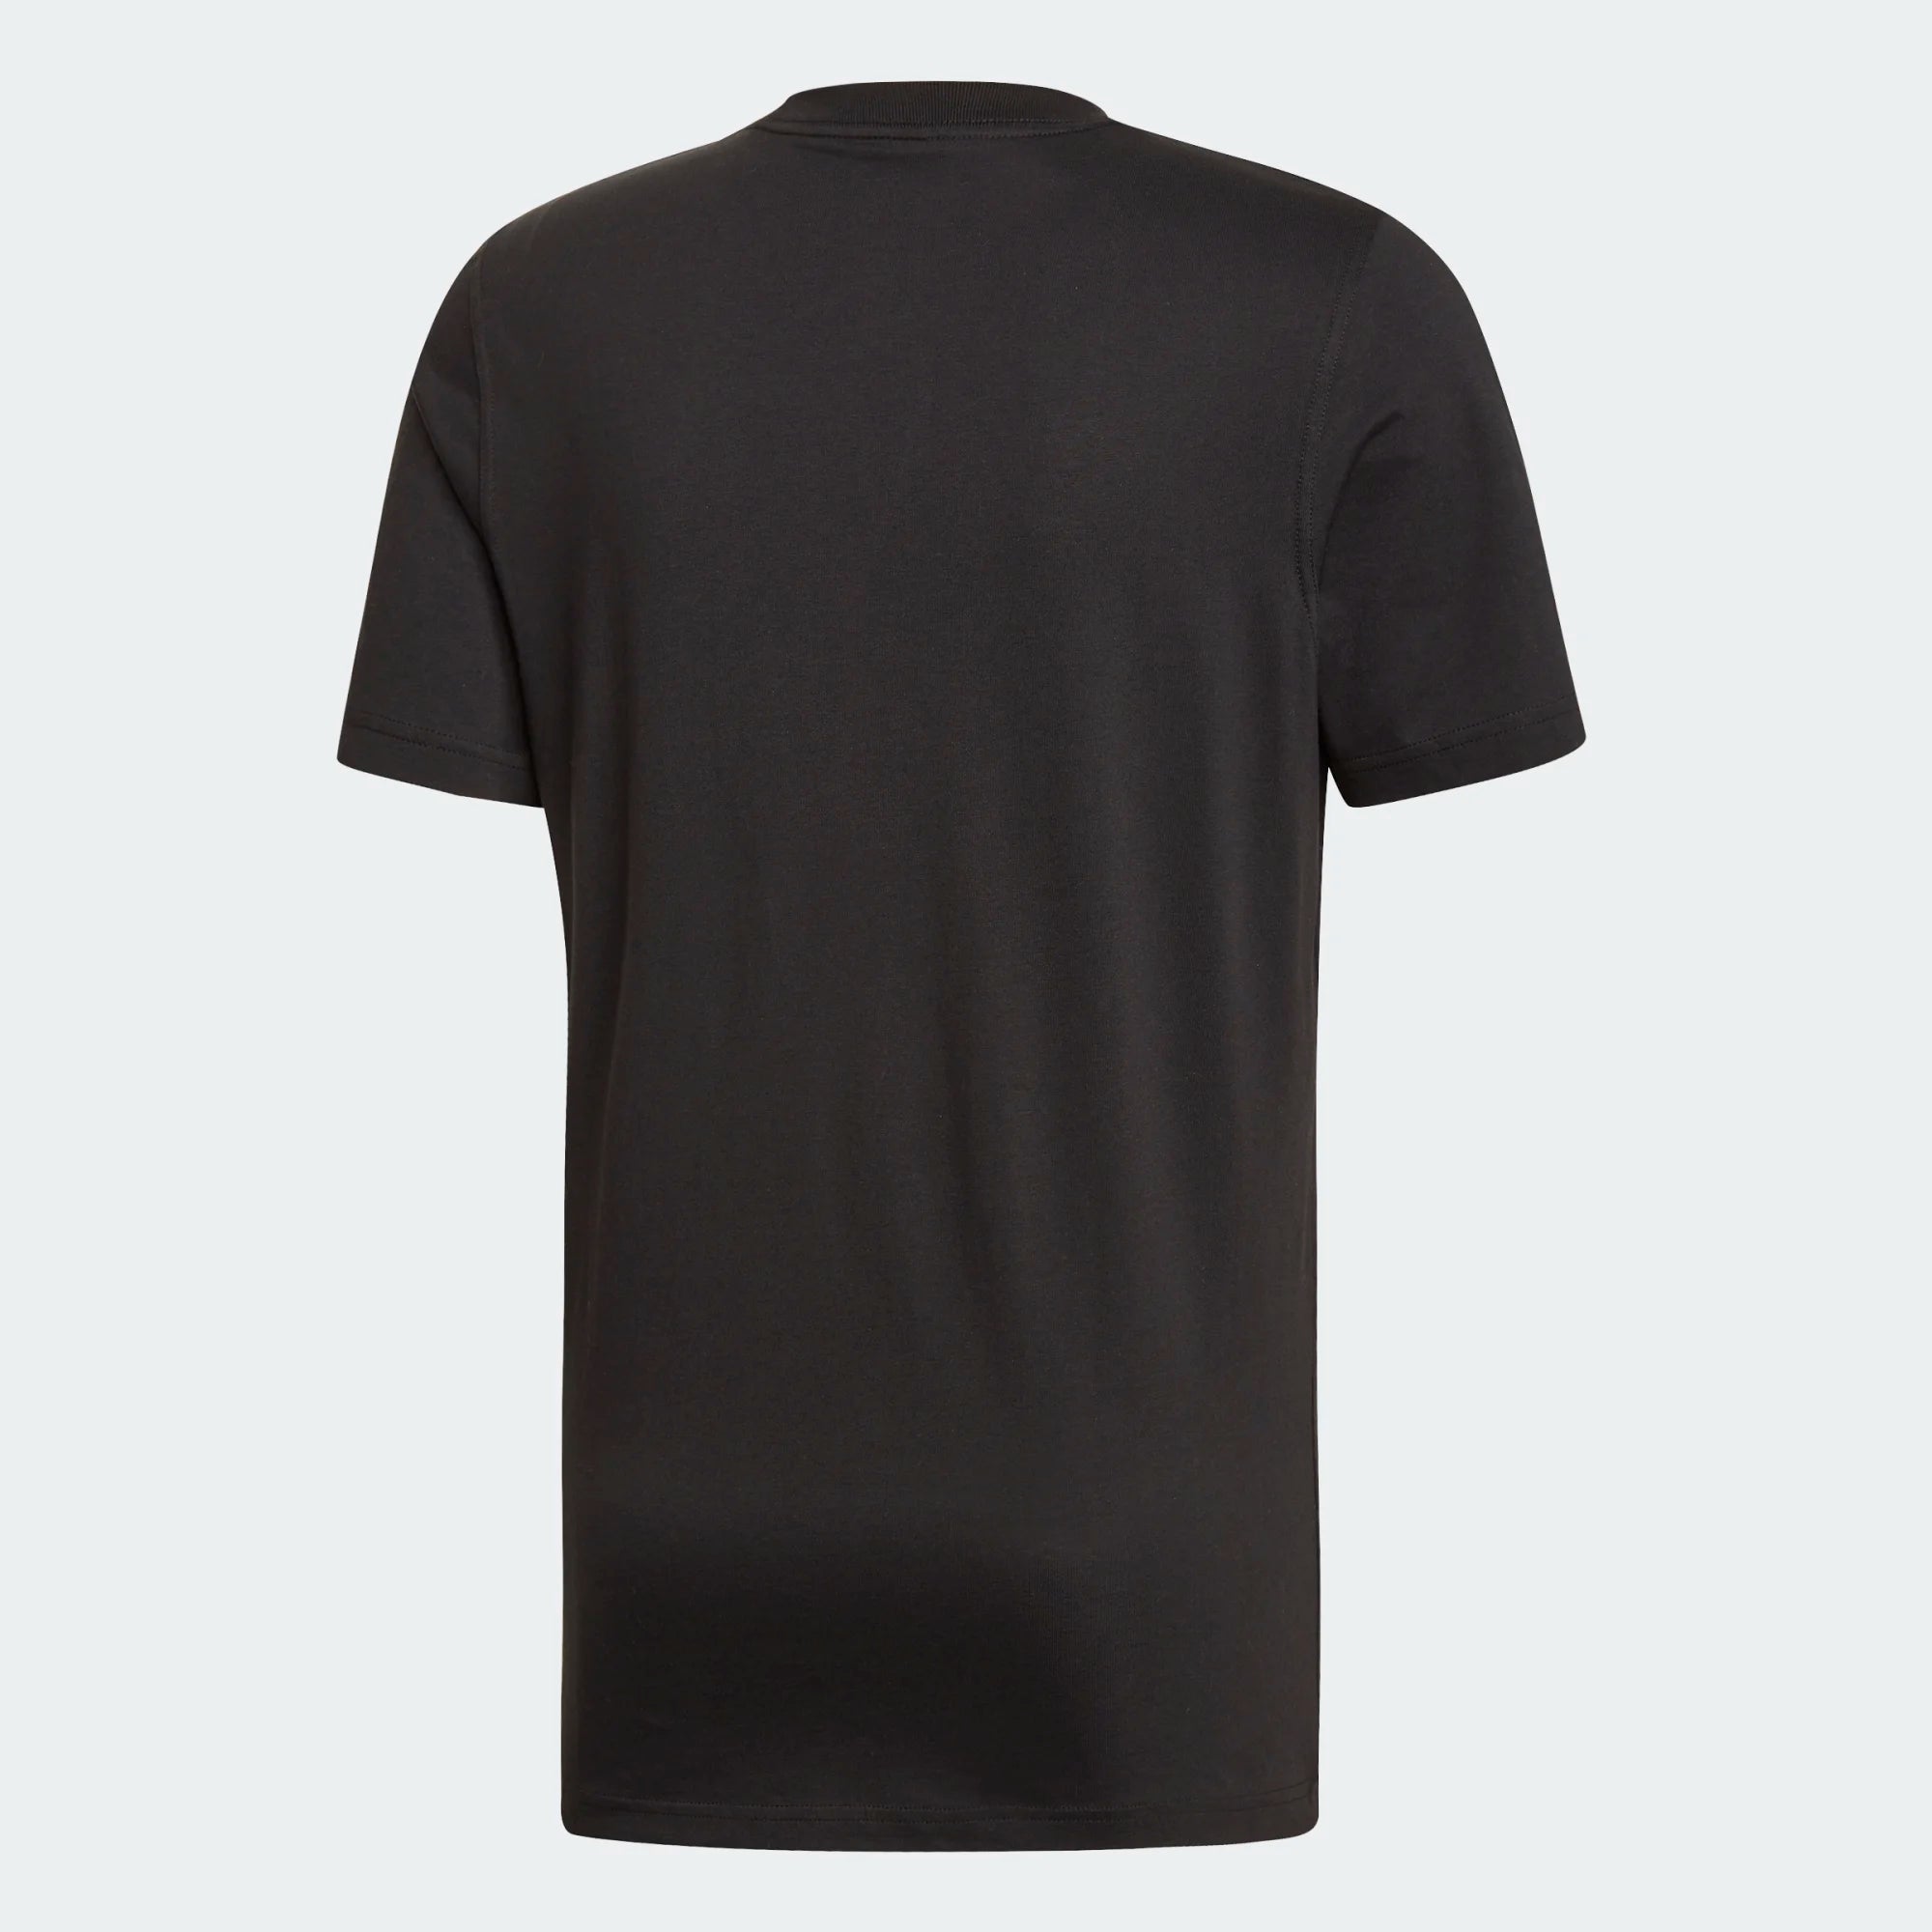 tradesports.co.uk Adidas Originals Men's Filled Label T-Shirt - Black